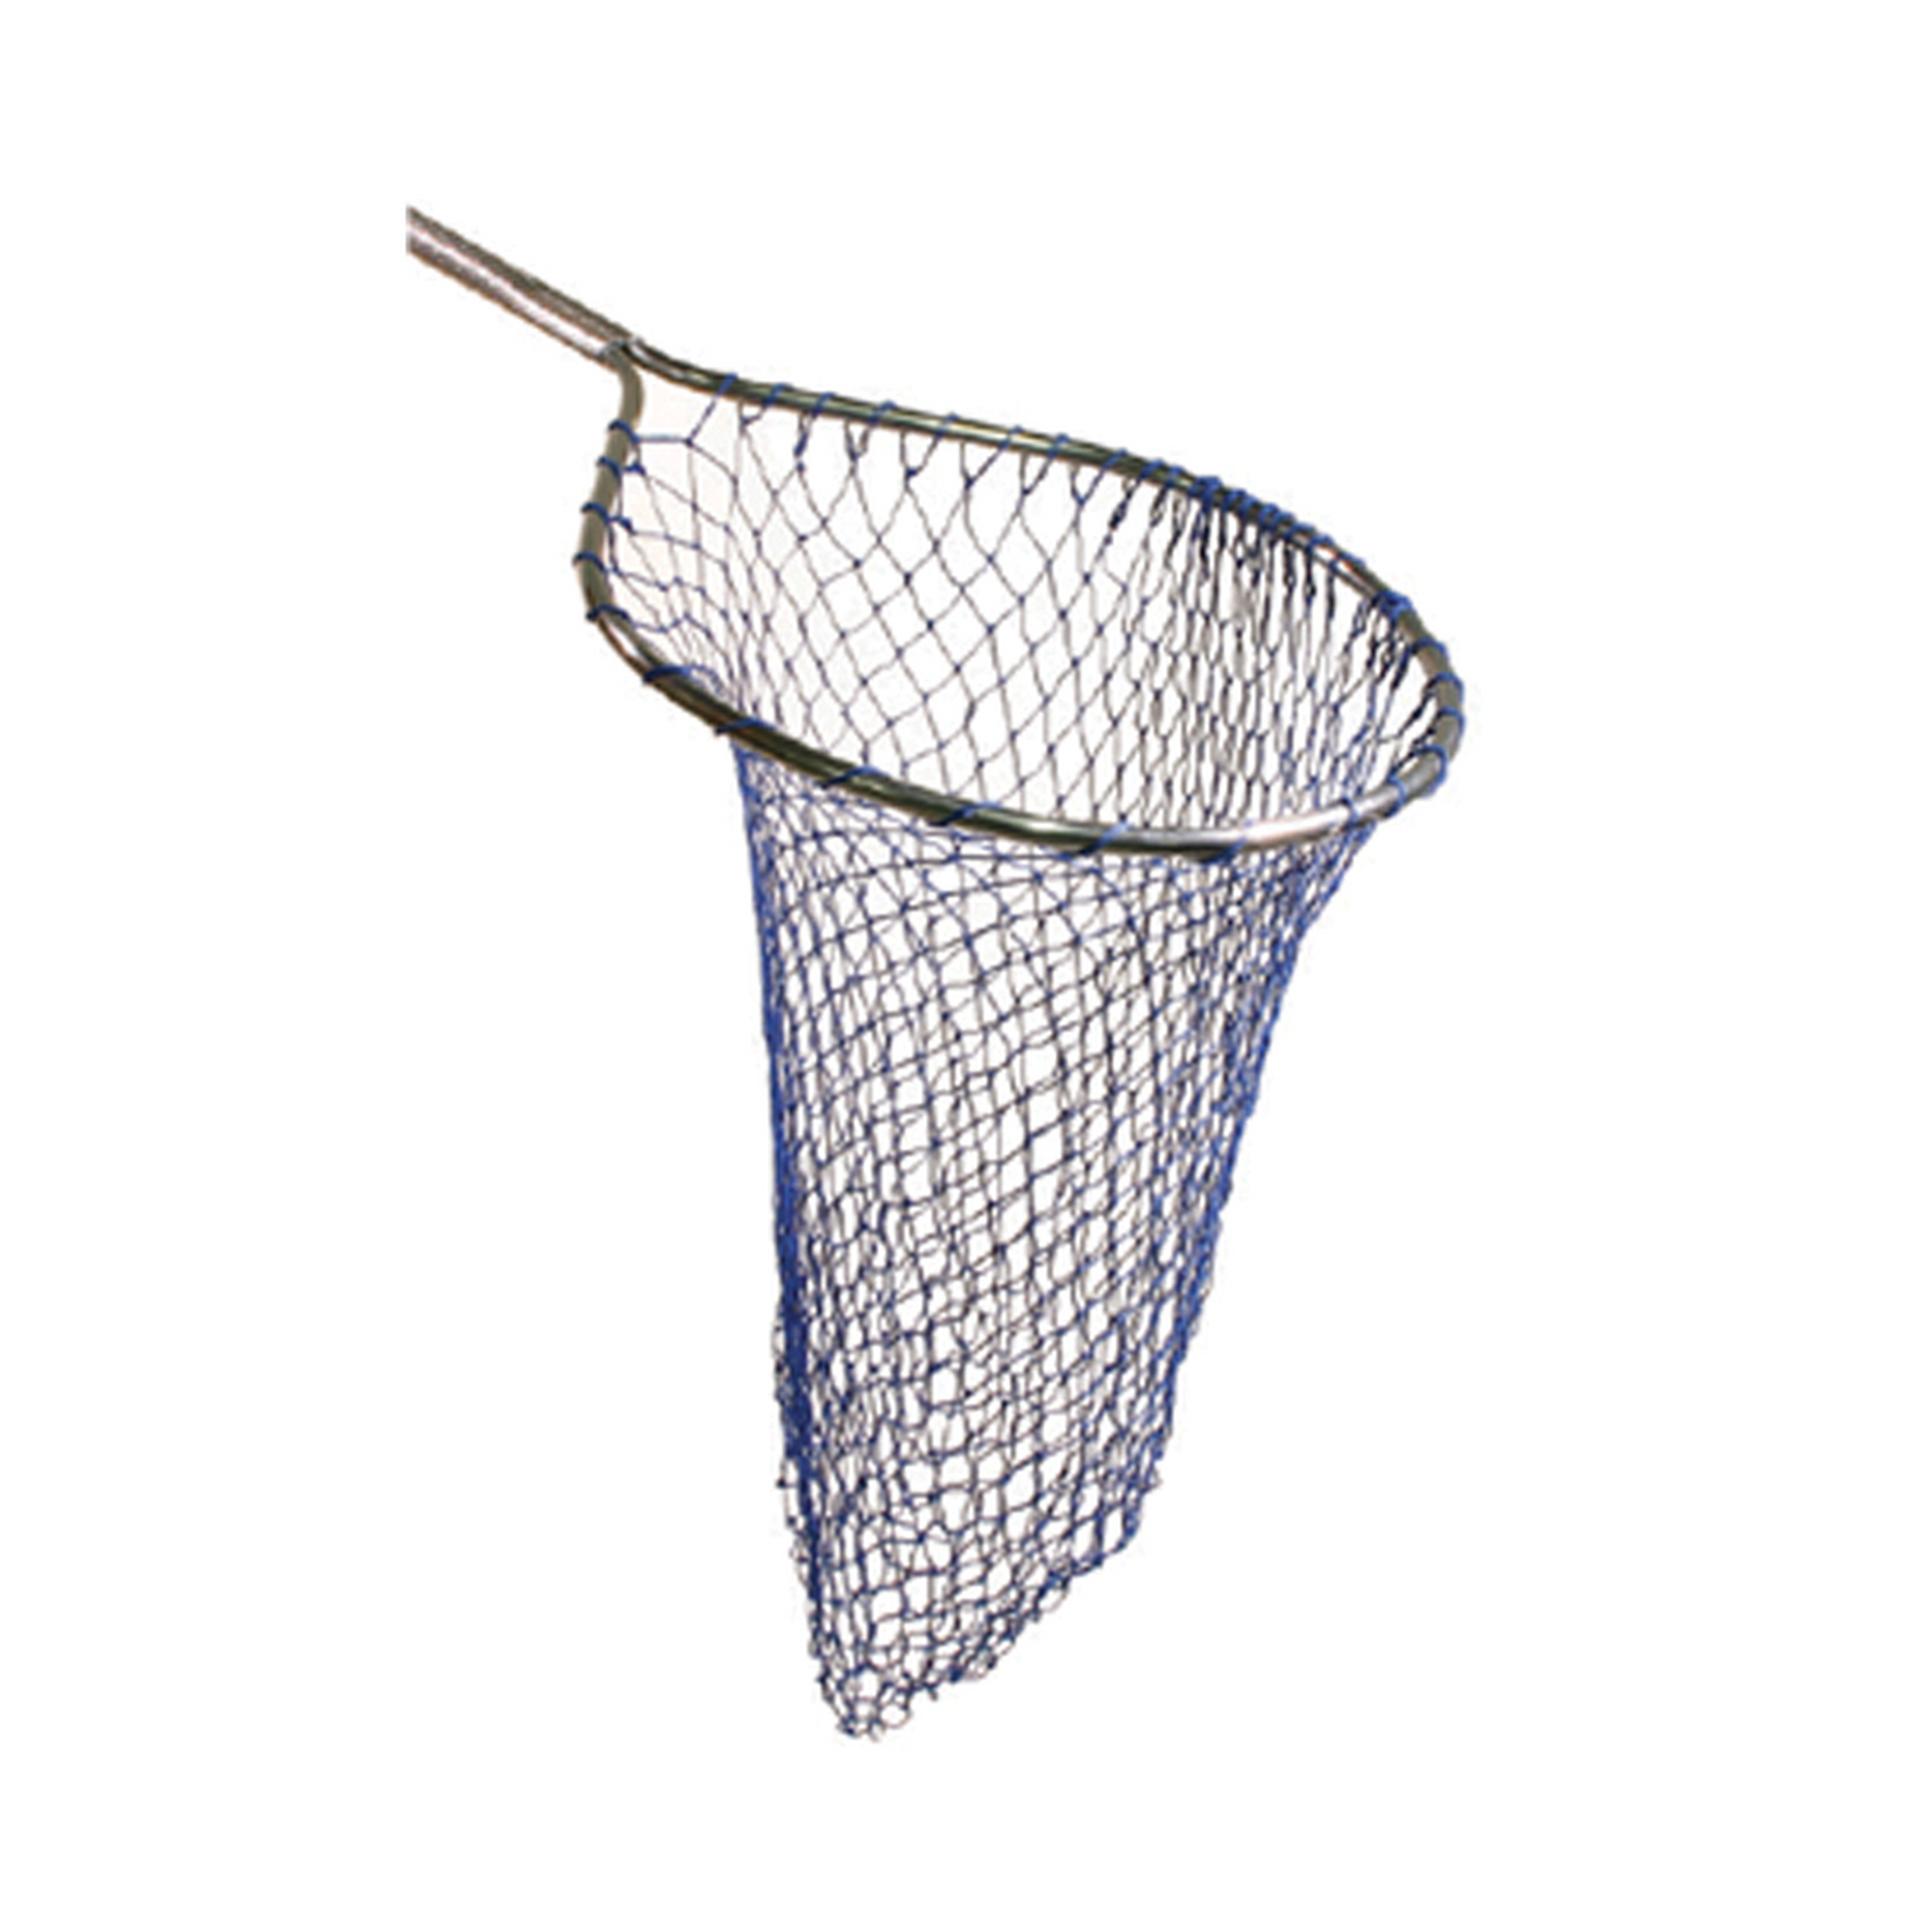 FRABILL Scooper Shrimp Net, 6' to 8' Telescoping Handle, 21 x 25